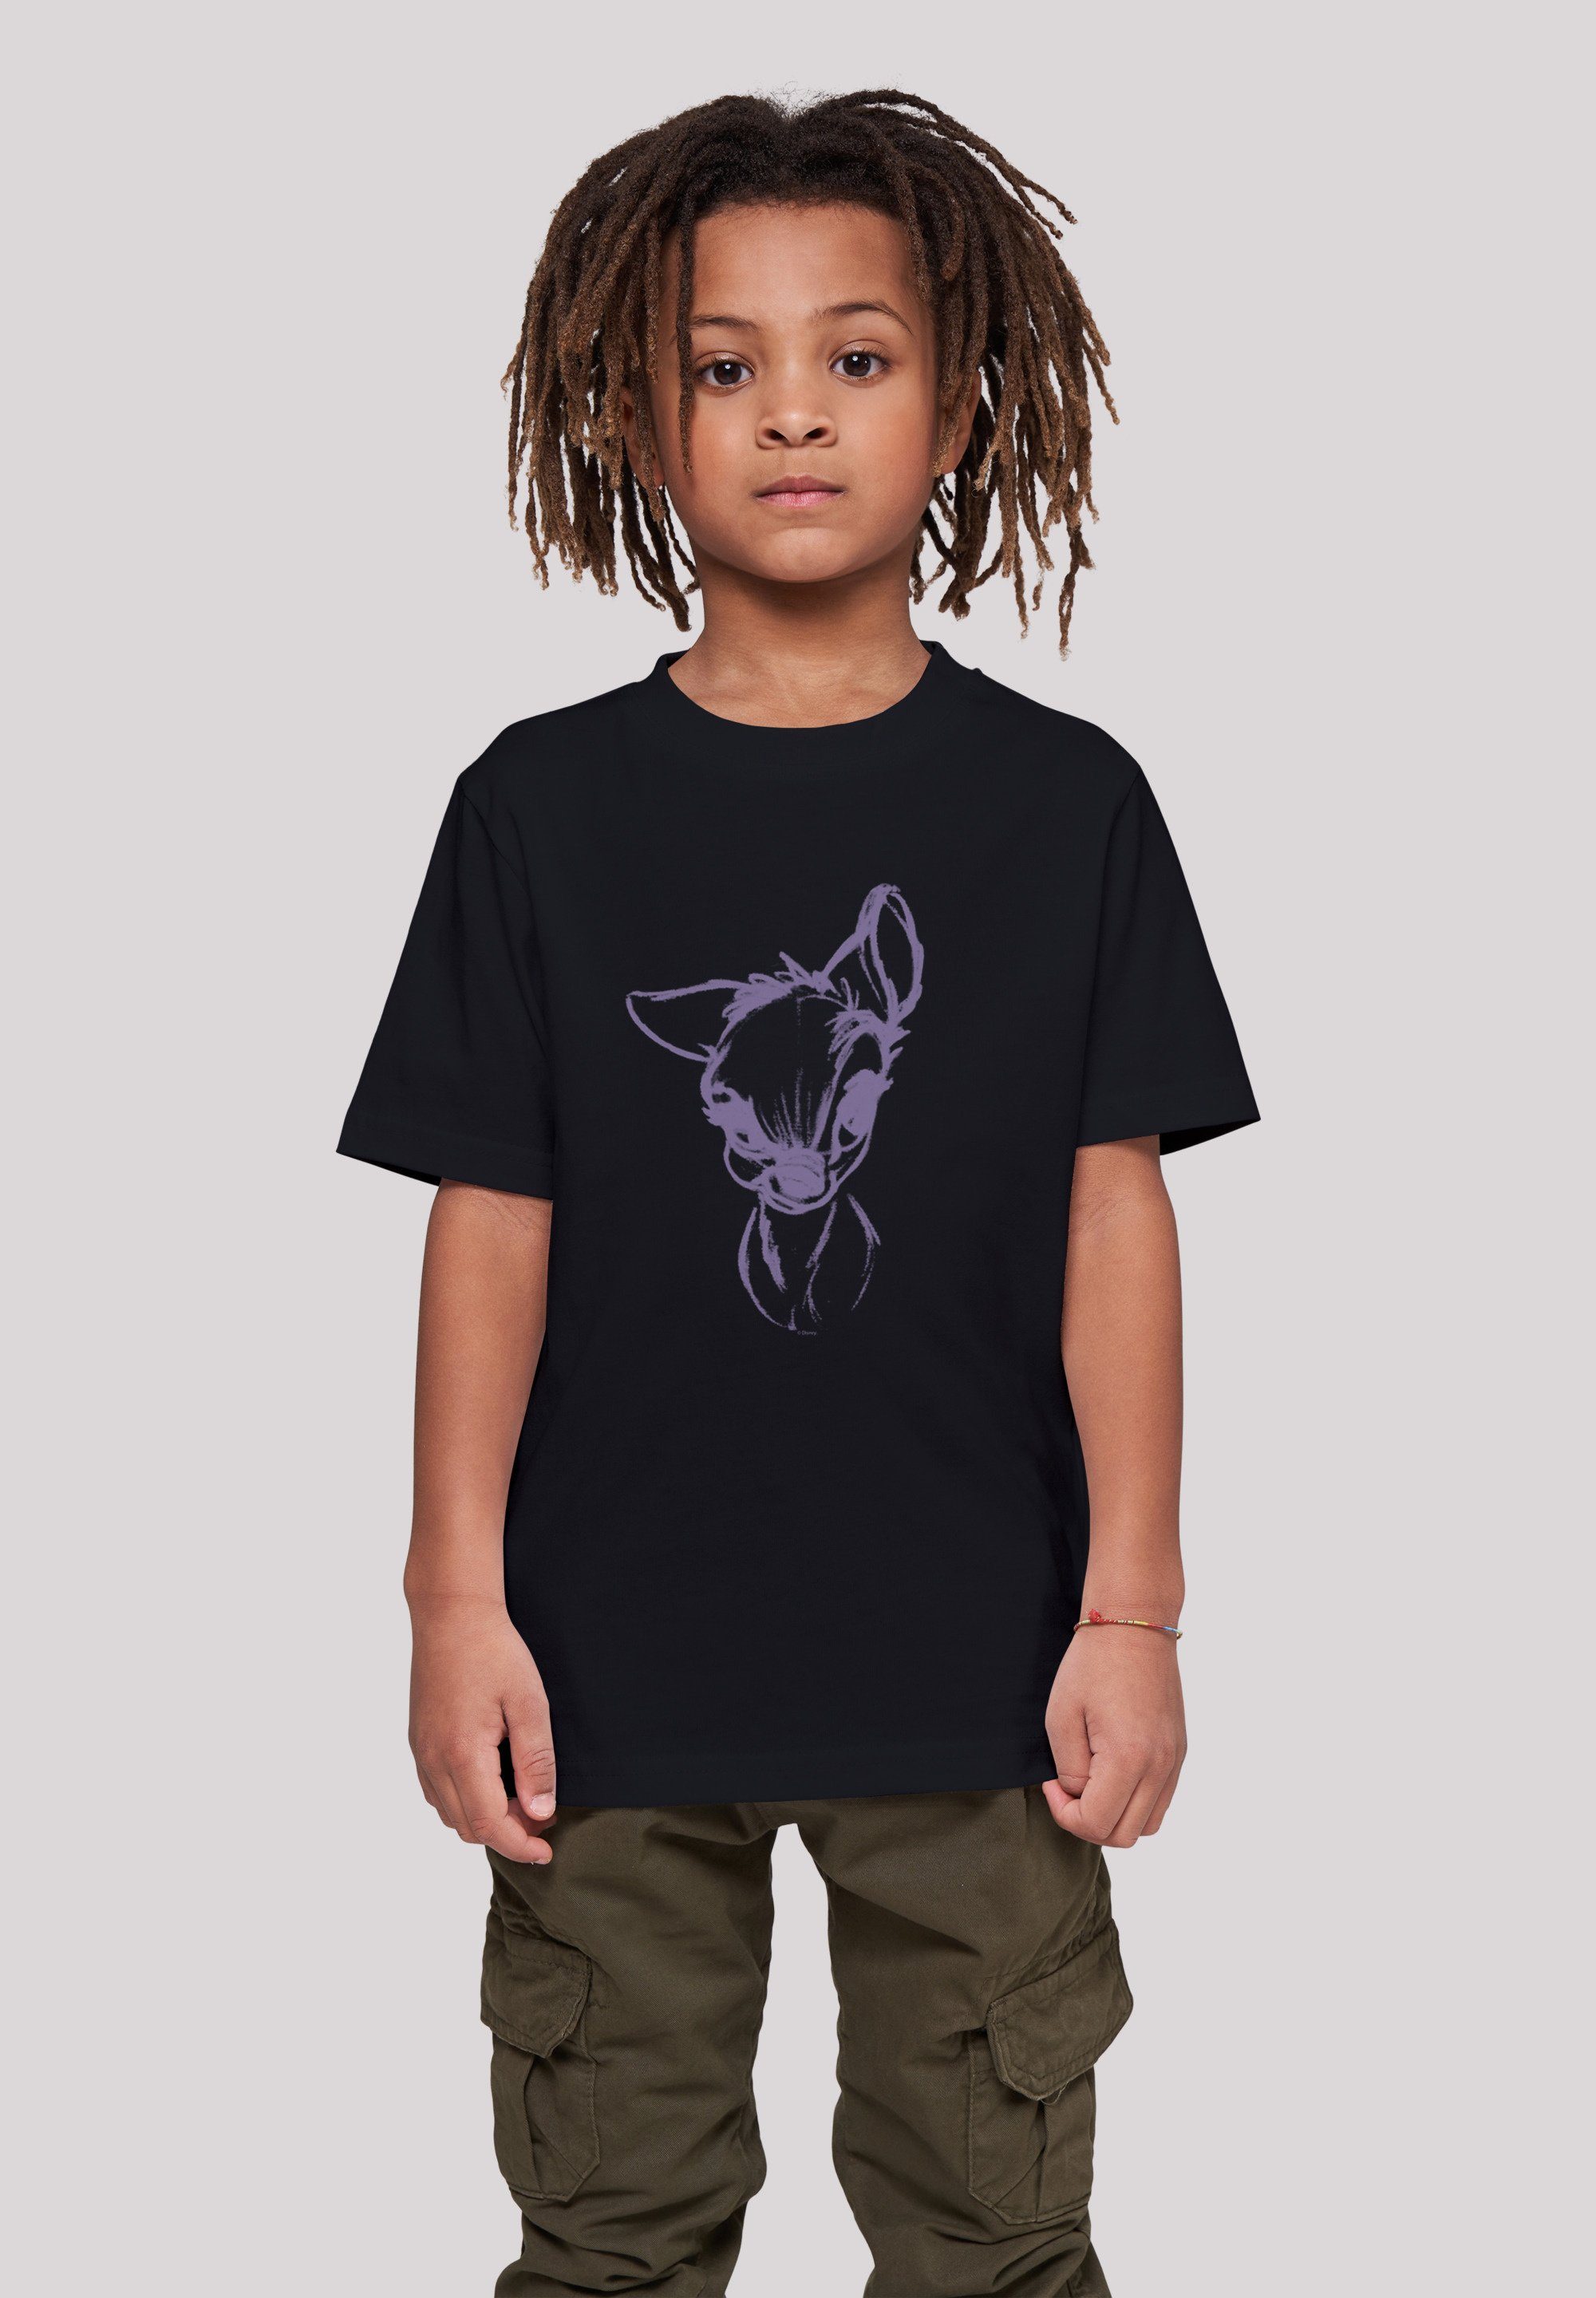 T-Shirt Kinder,Premium Disney F4NT4STIC schwarz Bambi Merch,Jungen,Mädchen,Bedruckt Mood Unisex